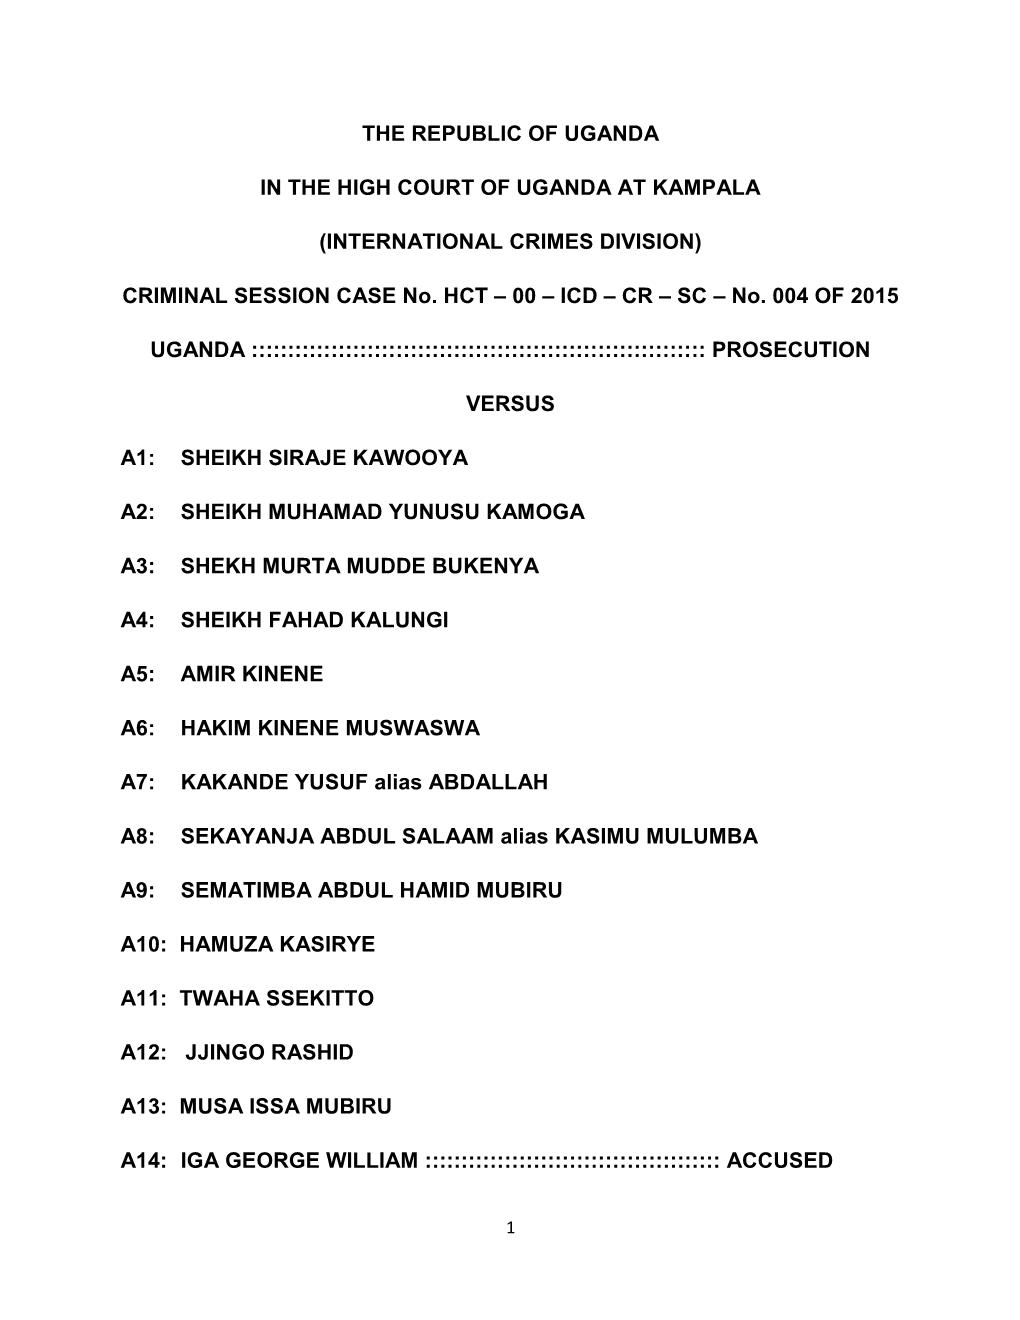 The Republic of Uganda in the High Court of Uganda